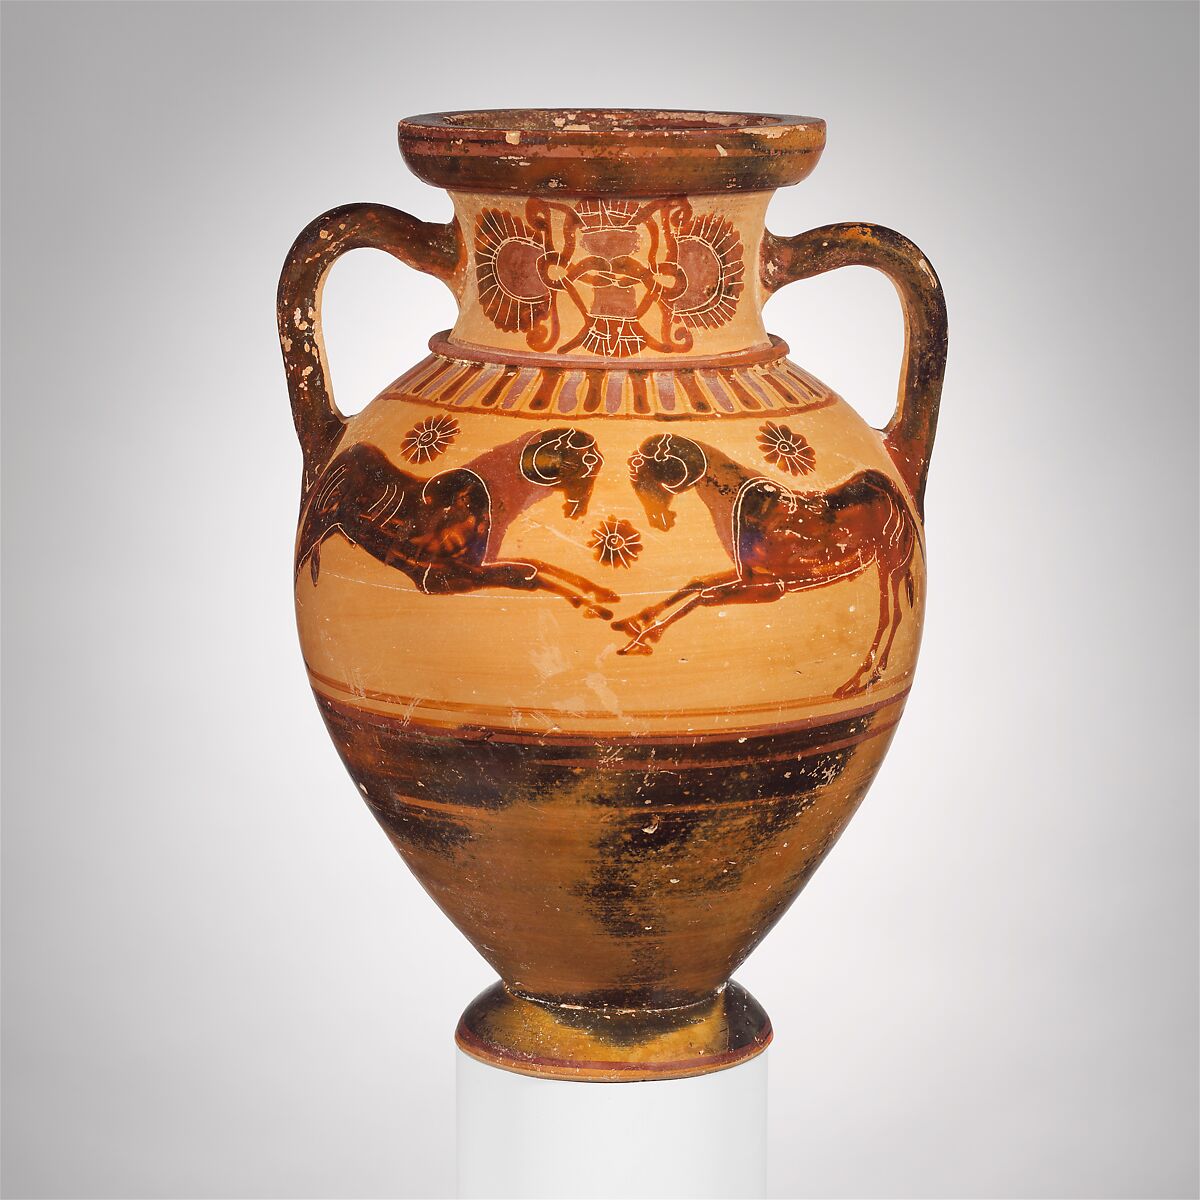 Terracotta neck-amphora (storage jar), Prometheus Painter, Terracotta, Greek, Attic